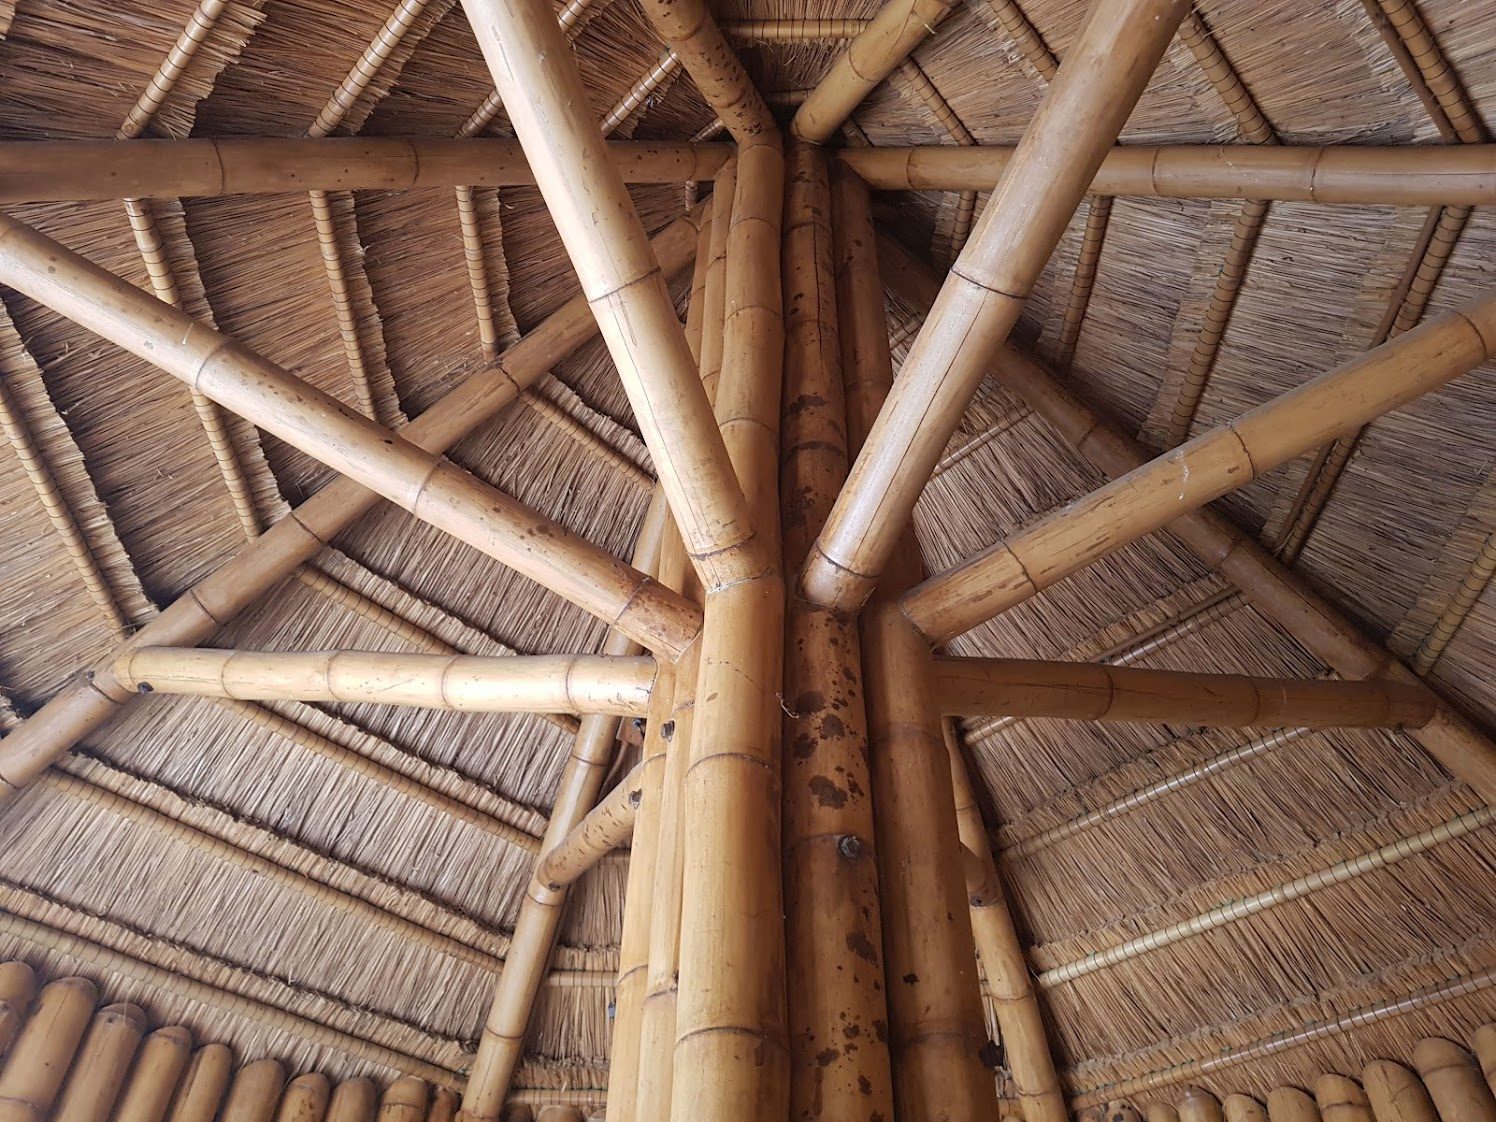 Bamboo panels